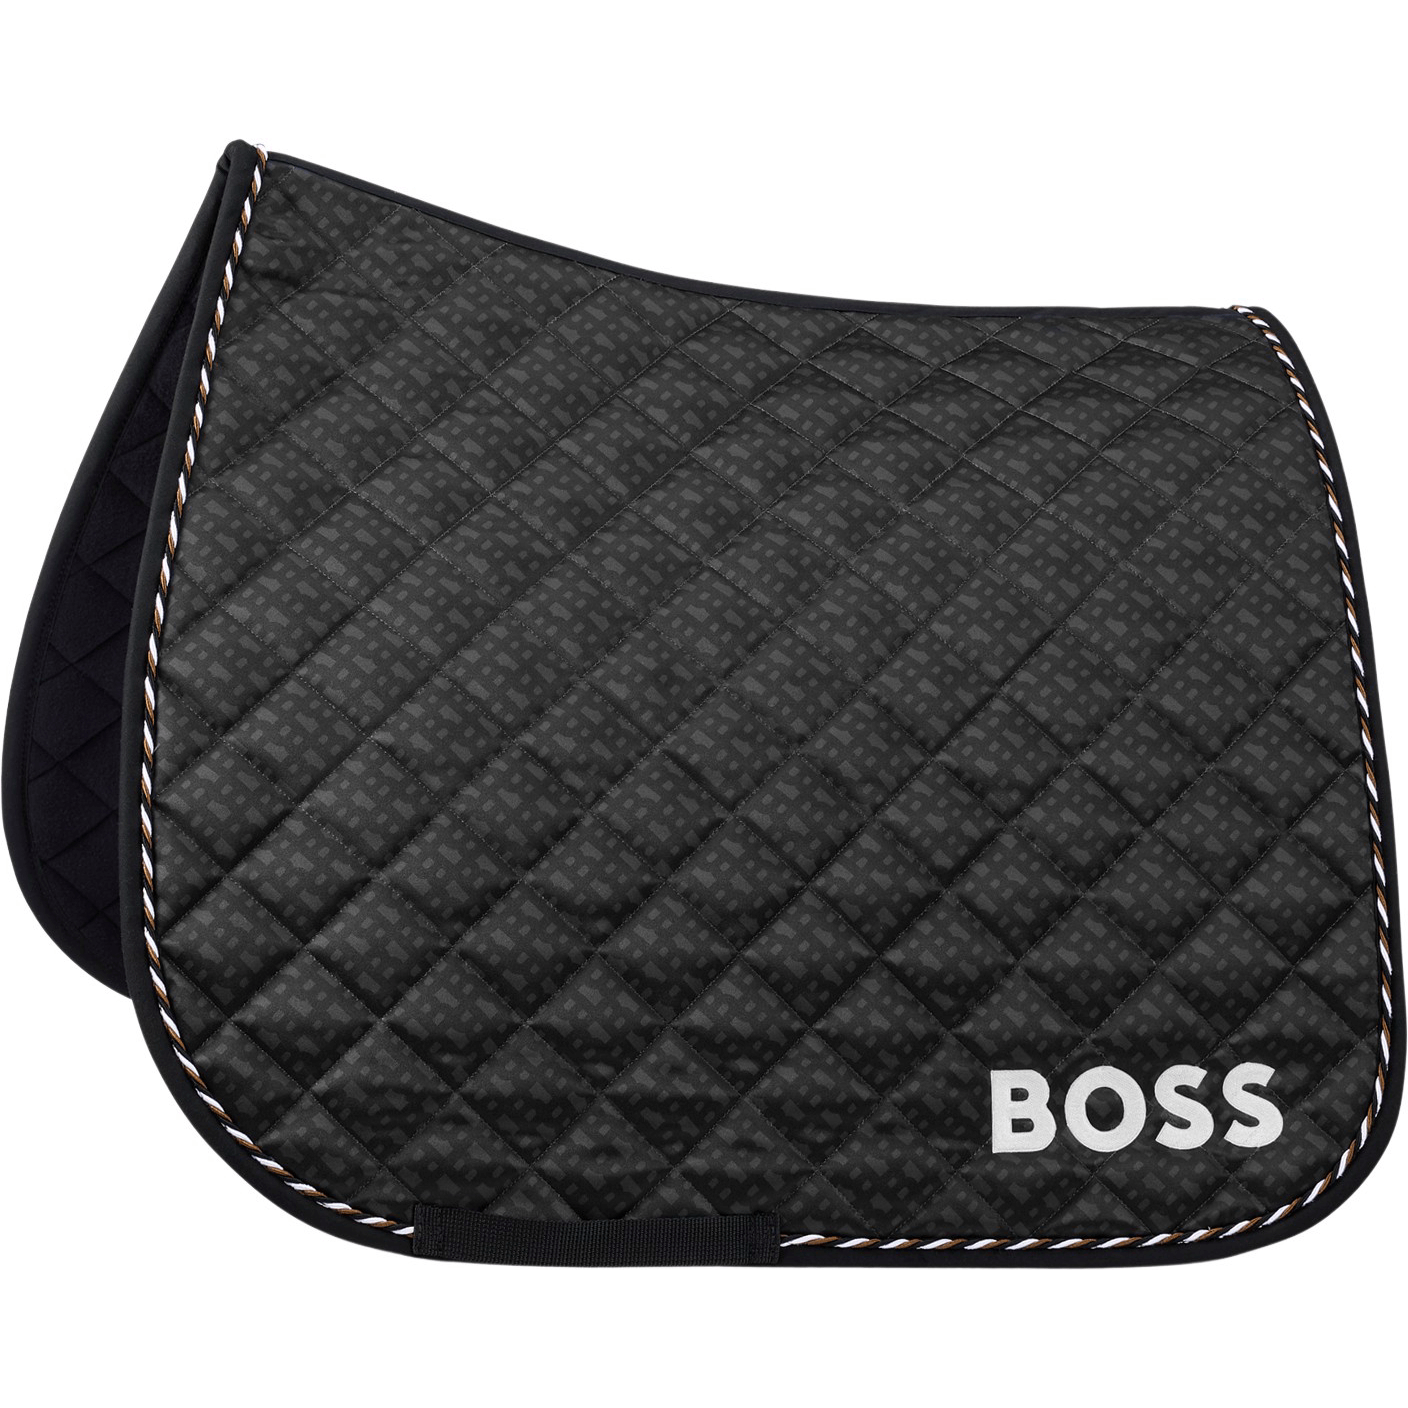 Boss Equine Products Boss Bucket (Black)